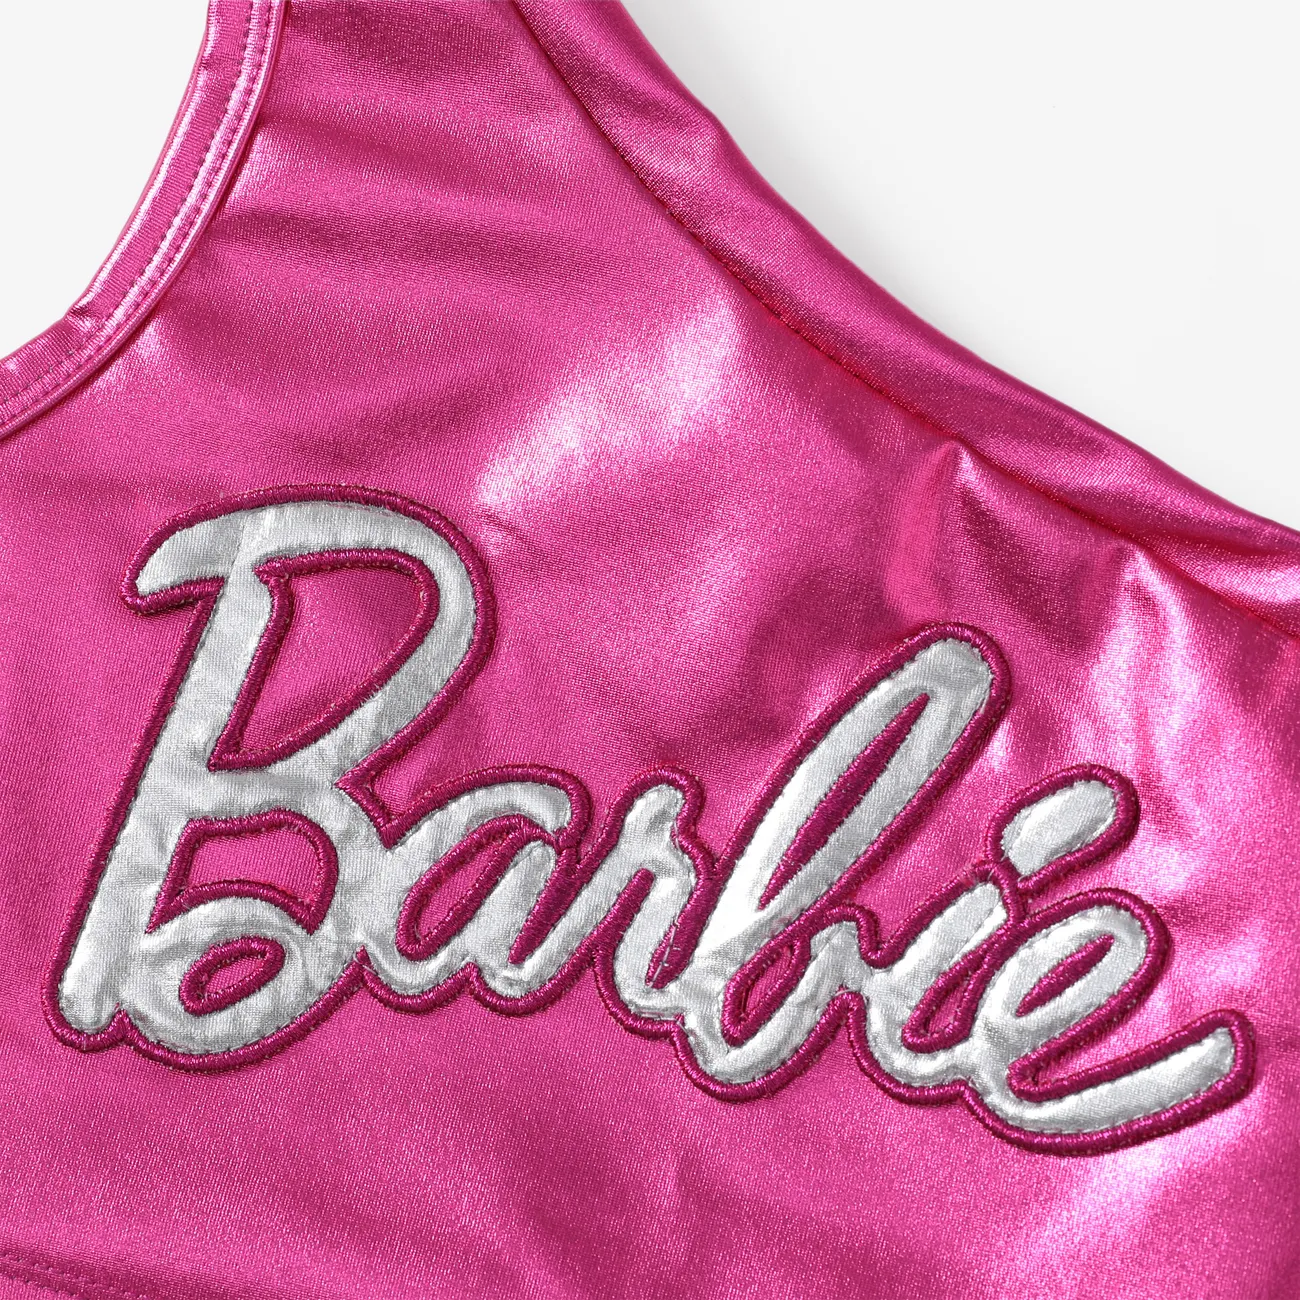 Barbie بدلة تنورة 2 - 6 سنوات حريمي بلا أكمام مقدمة مائلة حروف روزو big image 1